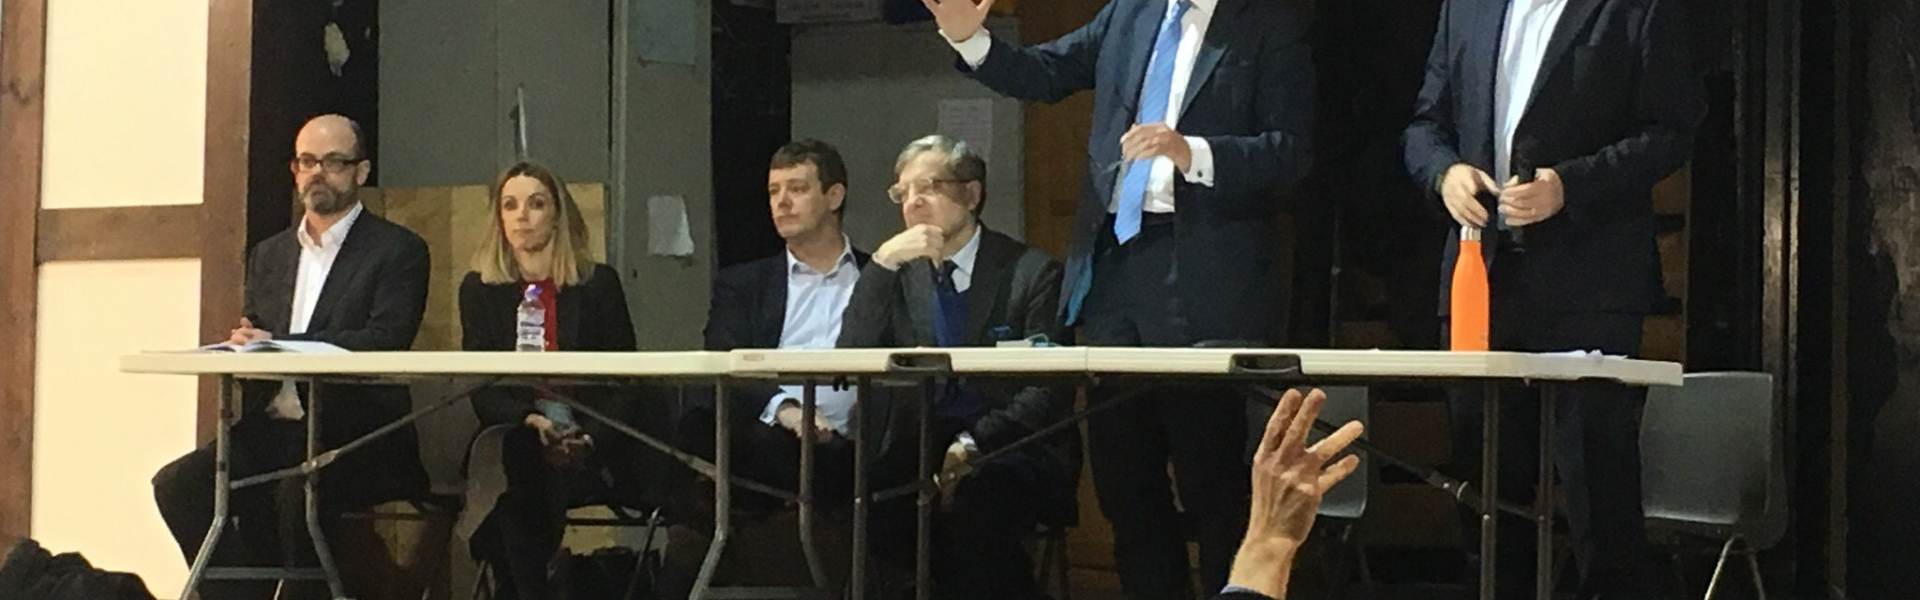 Greg Hands MP Heathrow meeting